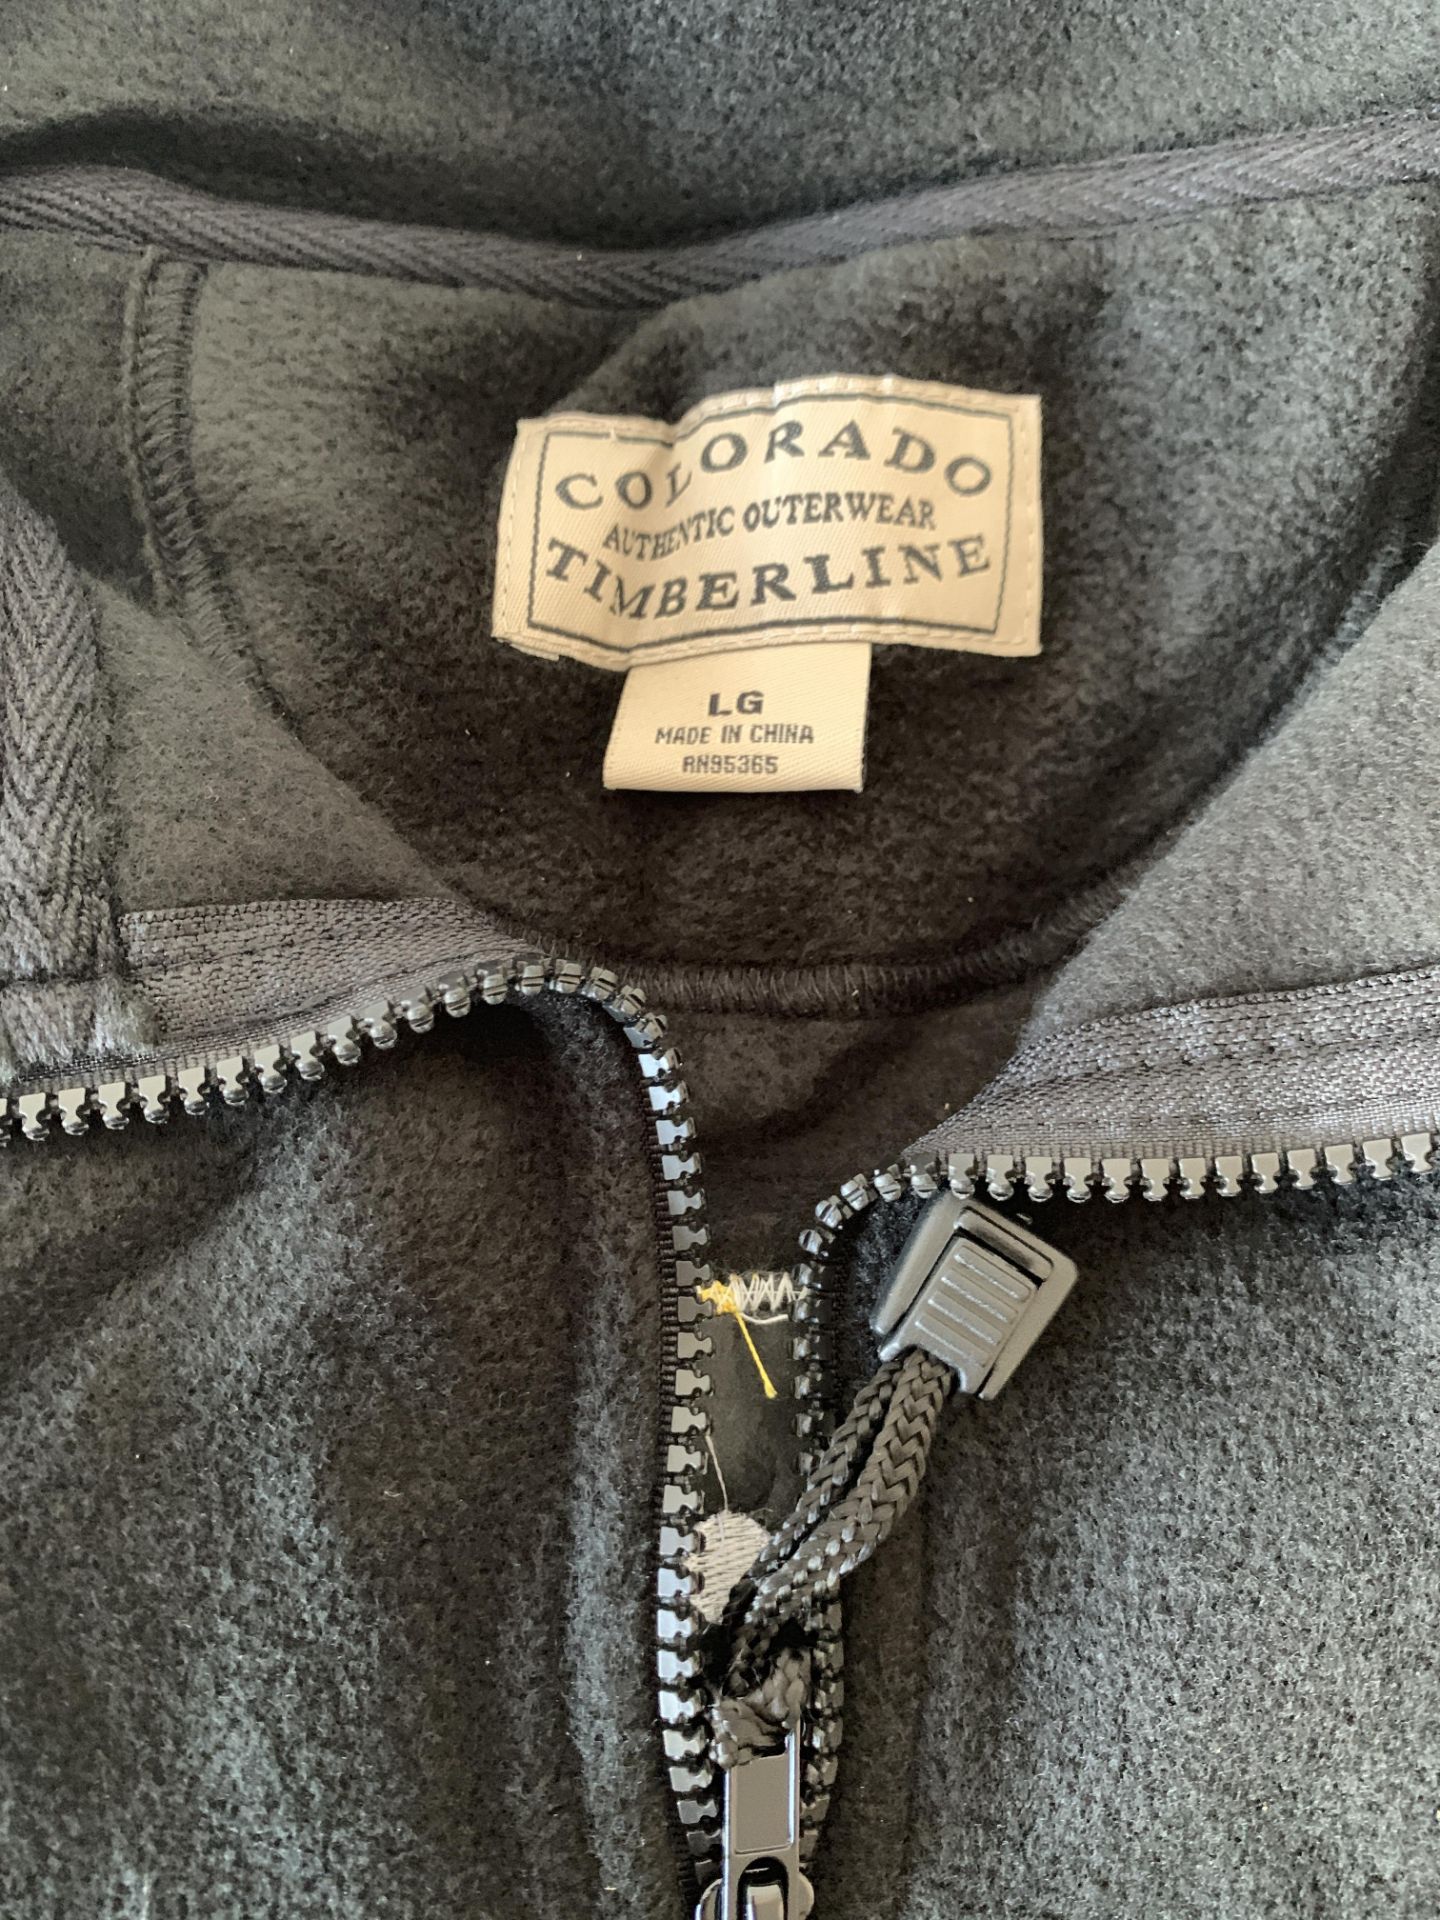 50 Fleece Men's Zip-Up Jackets, Colorado Timerline Authentic Outerwear, Large - Image 4 of 5